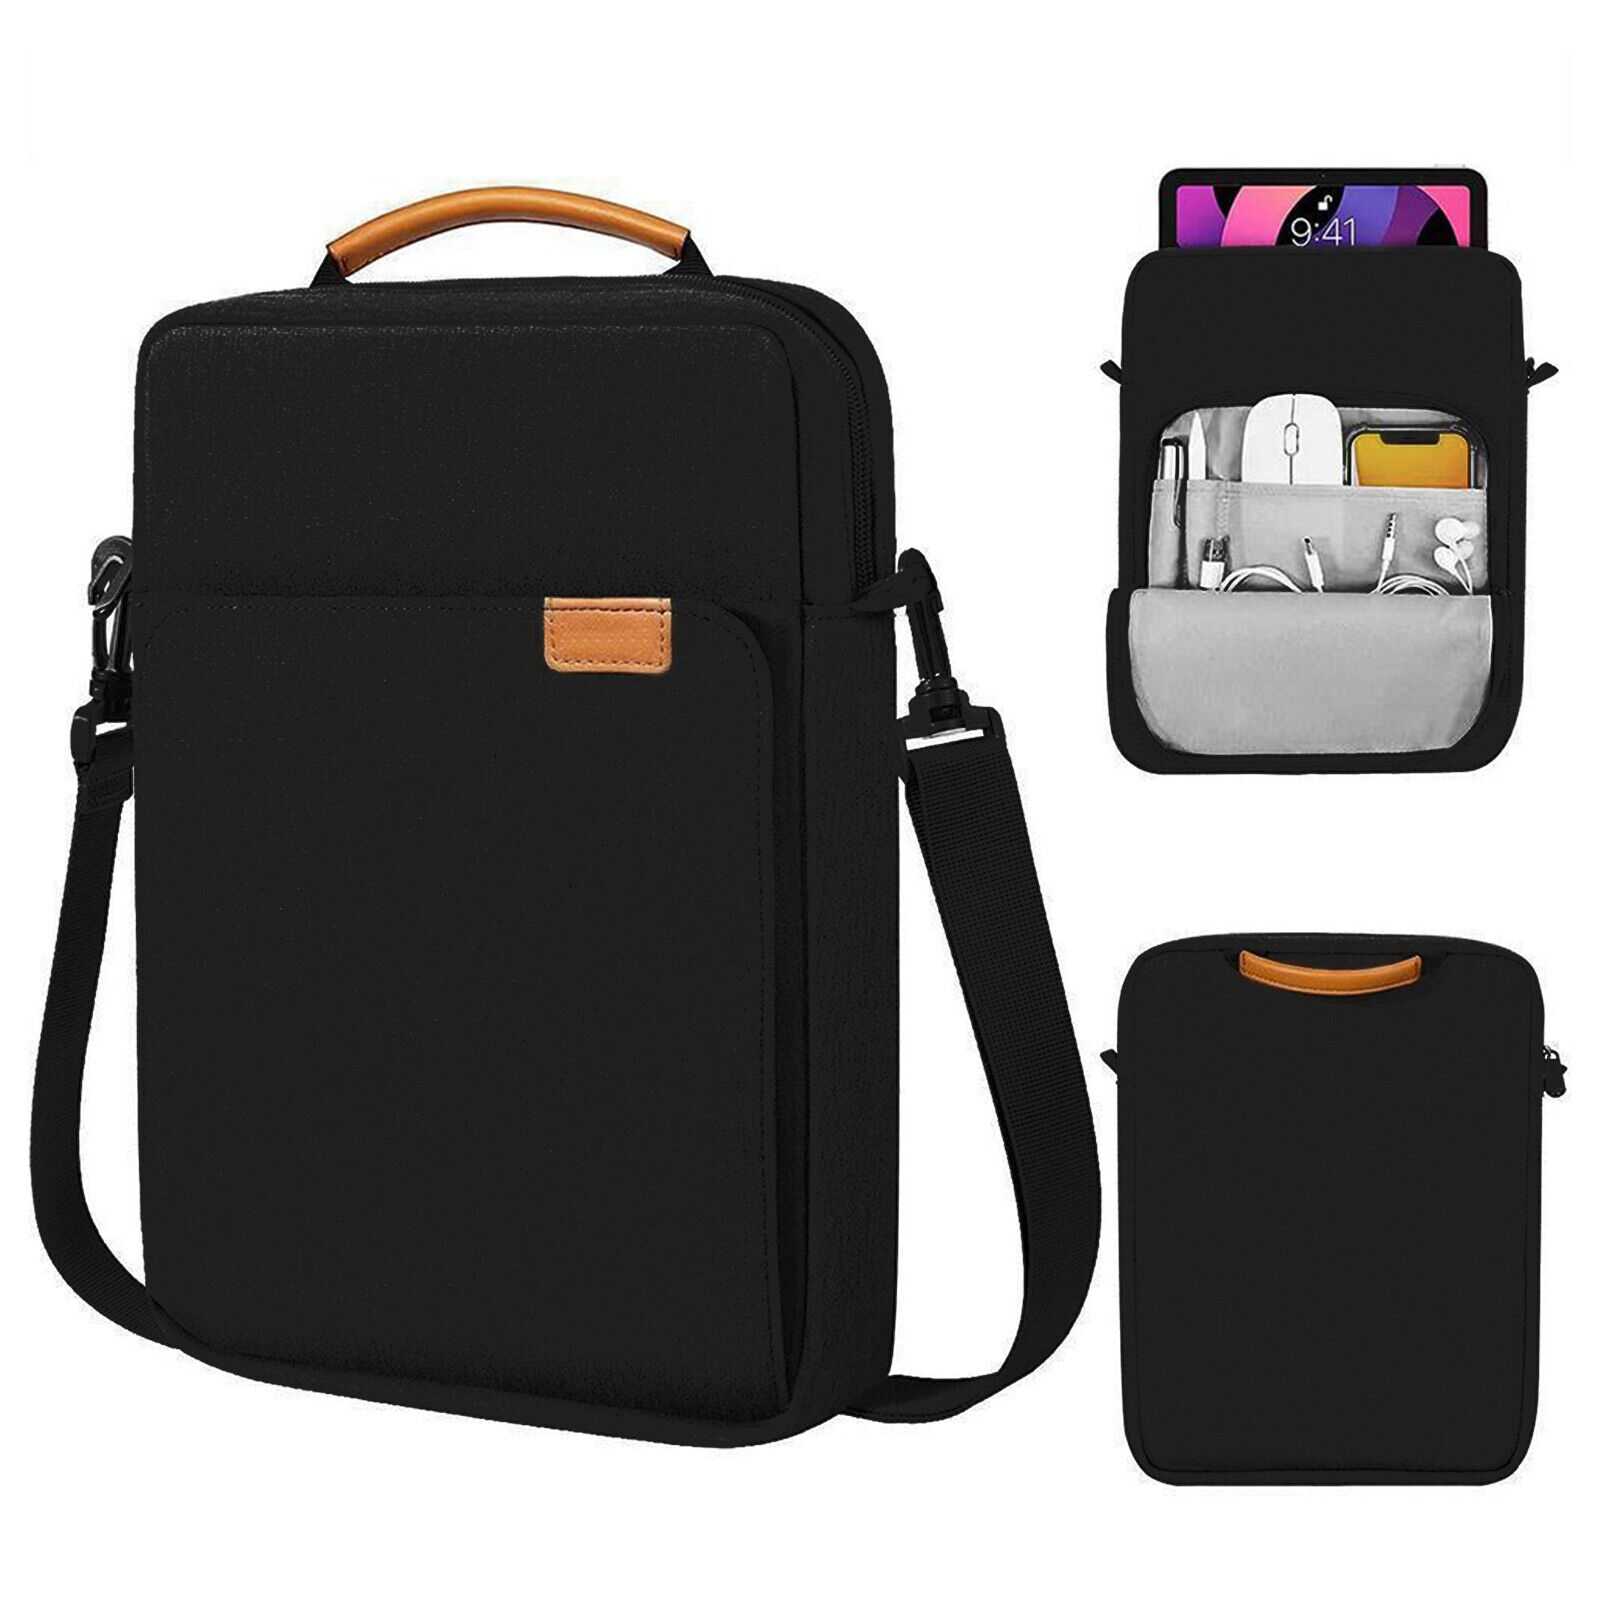 13 Inch Laptop Shoulder Bag Tablet Carrying Case for MacBook Pro Air/Chromebook